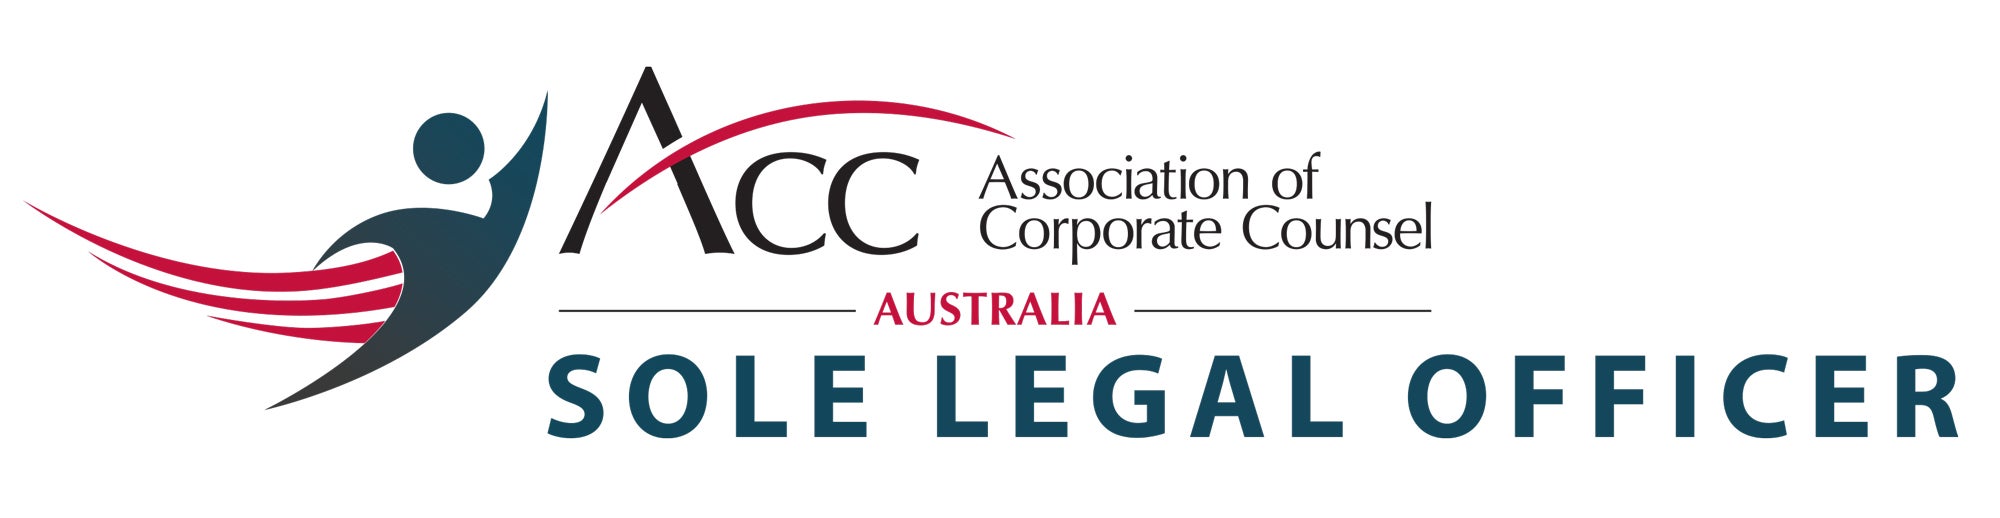 Sole Legal Officer logo